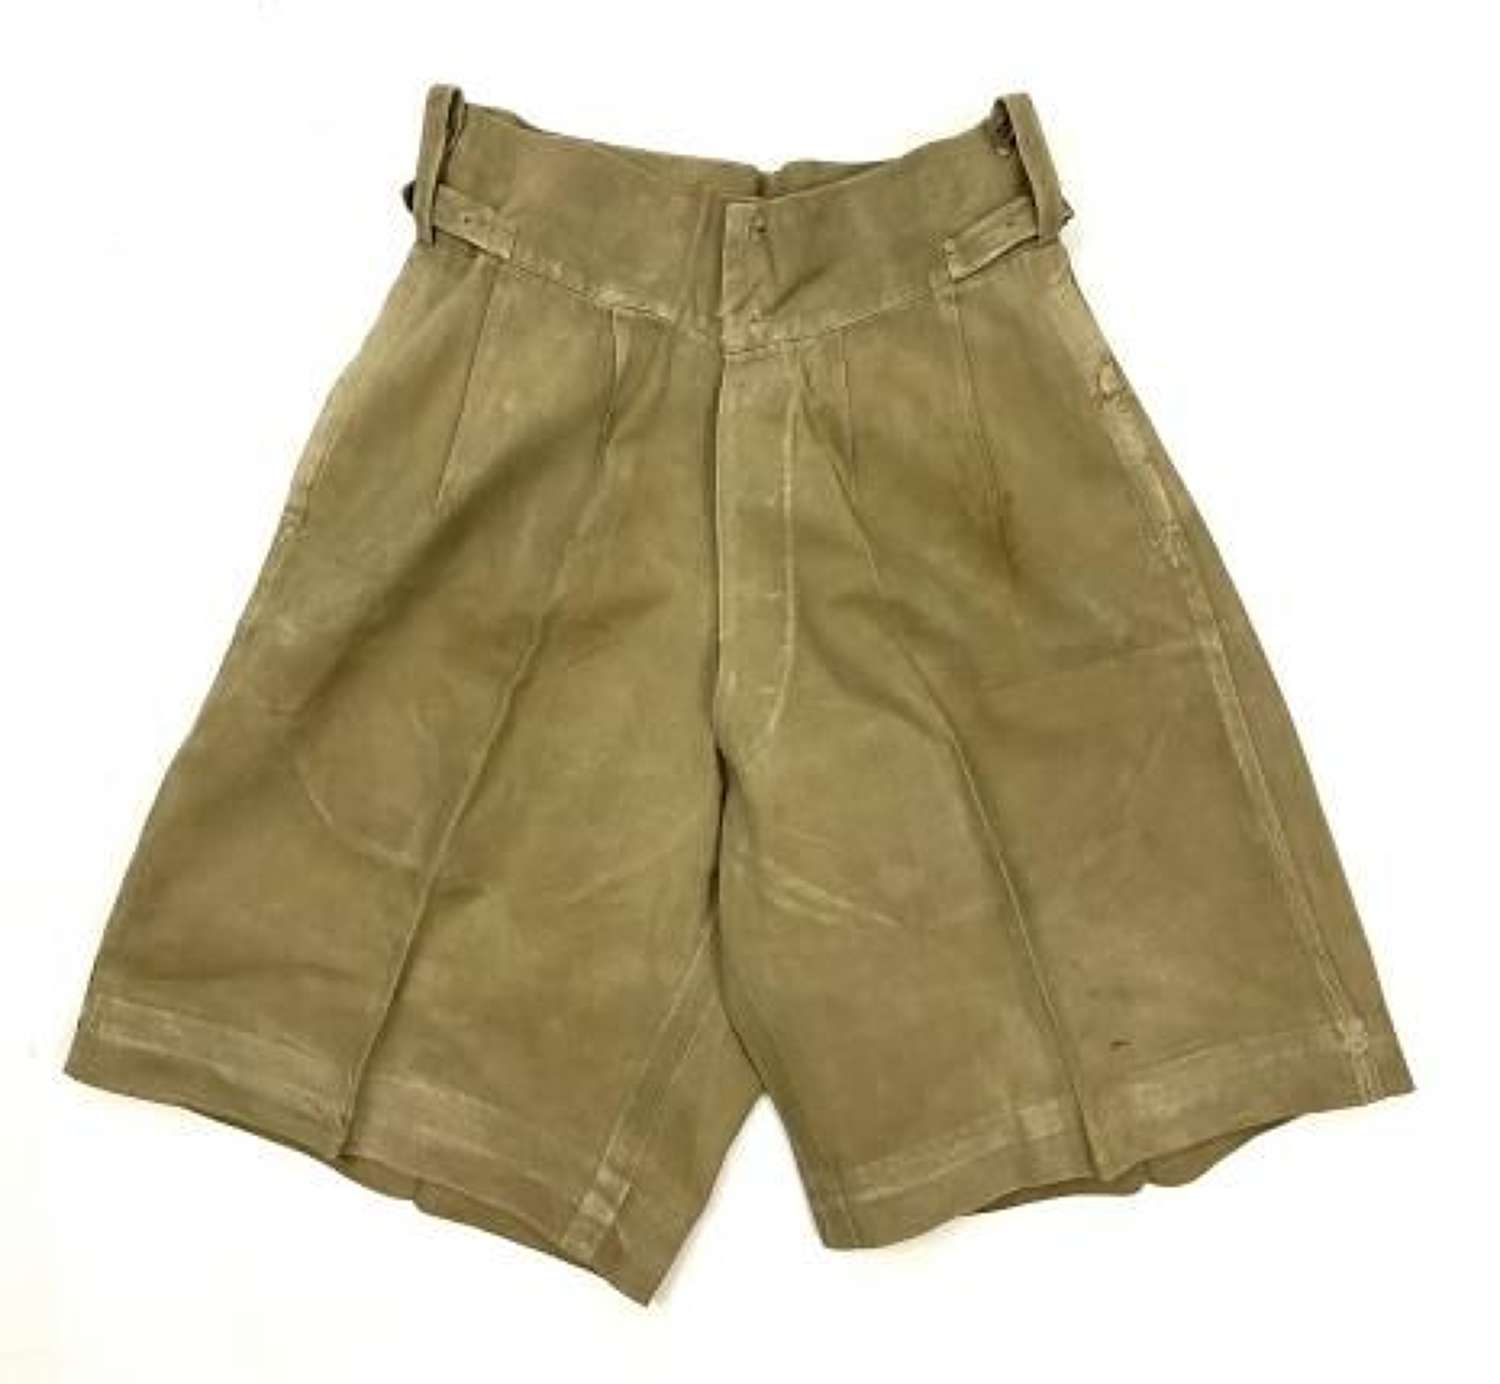 Original 1940s Khaki Drill Shorts